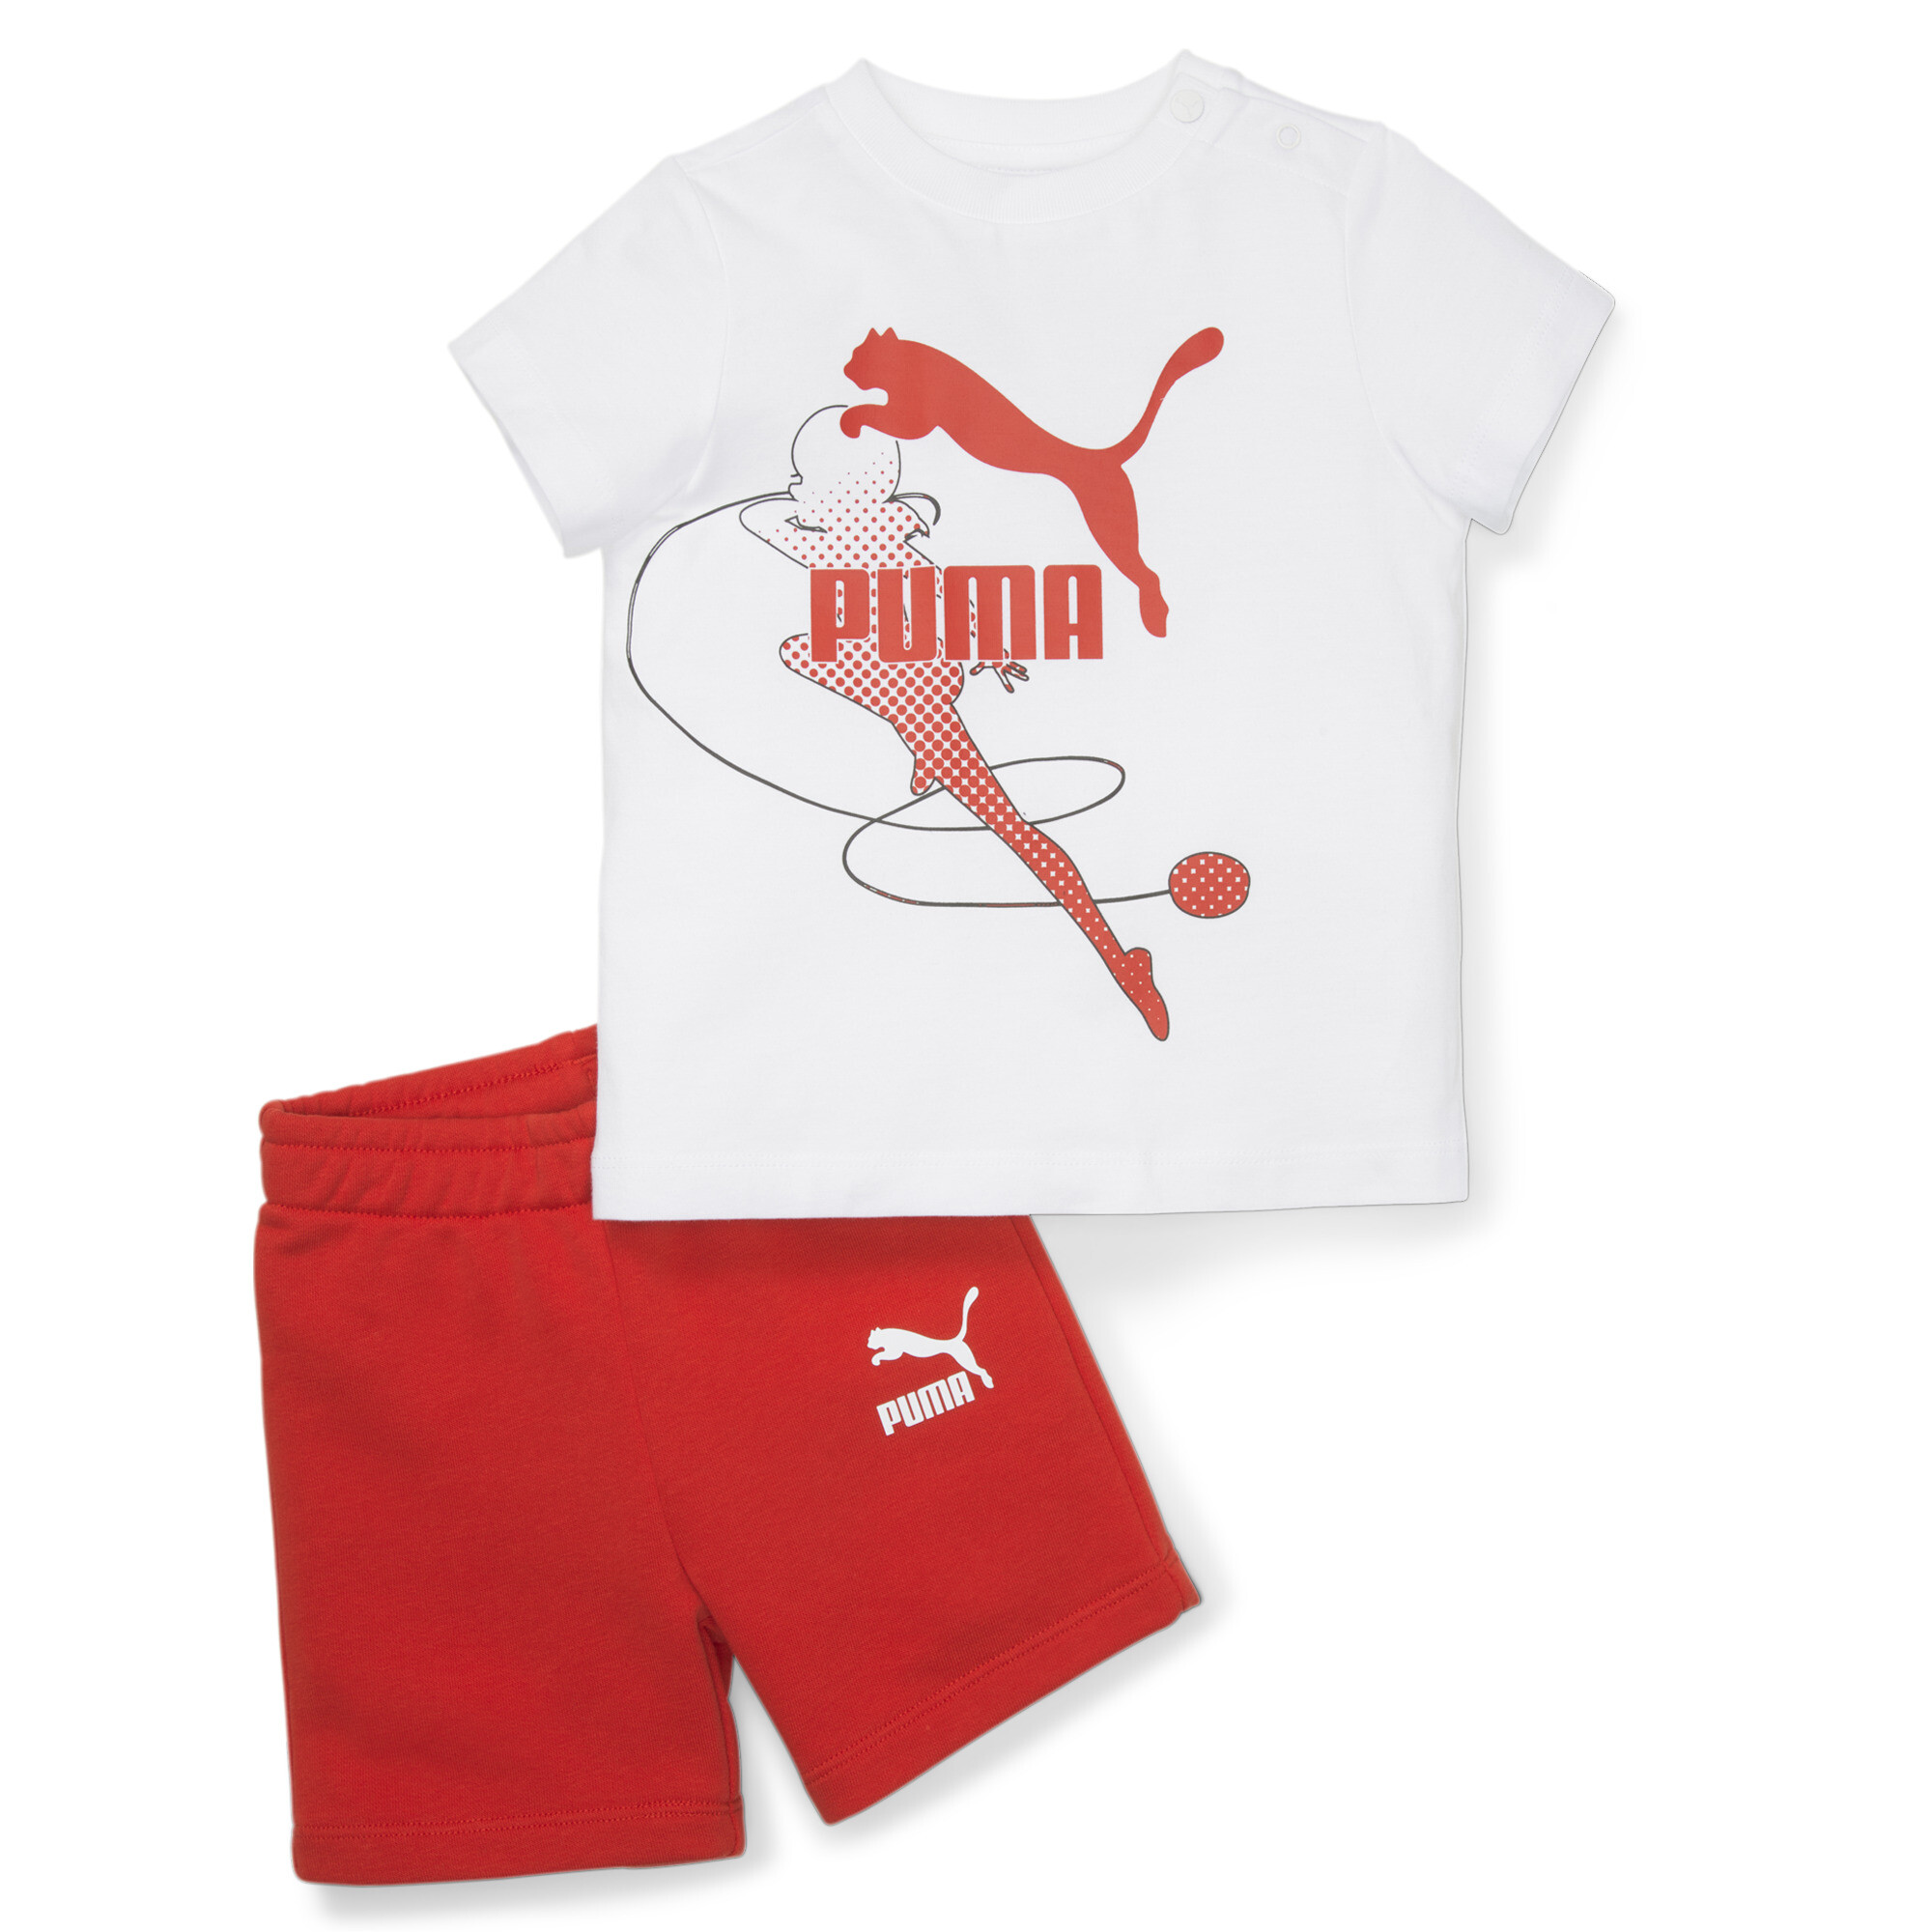 Puma X MIRACULOUS Set Kids, White, Size 2-4M, Clothing